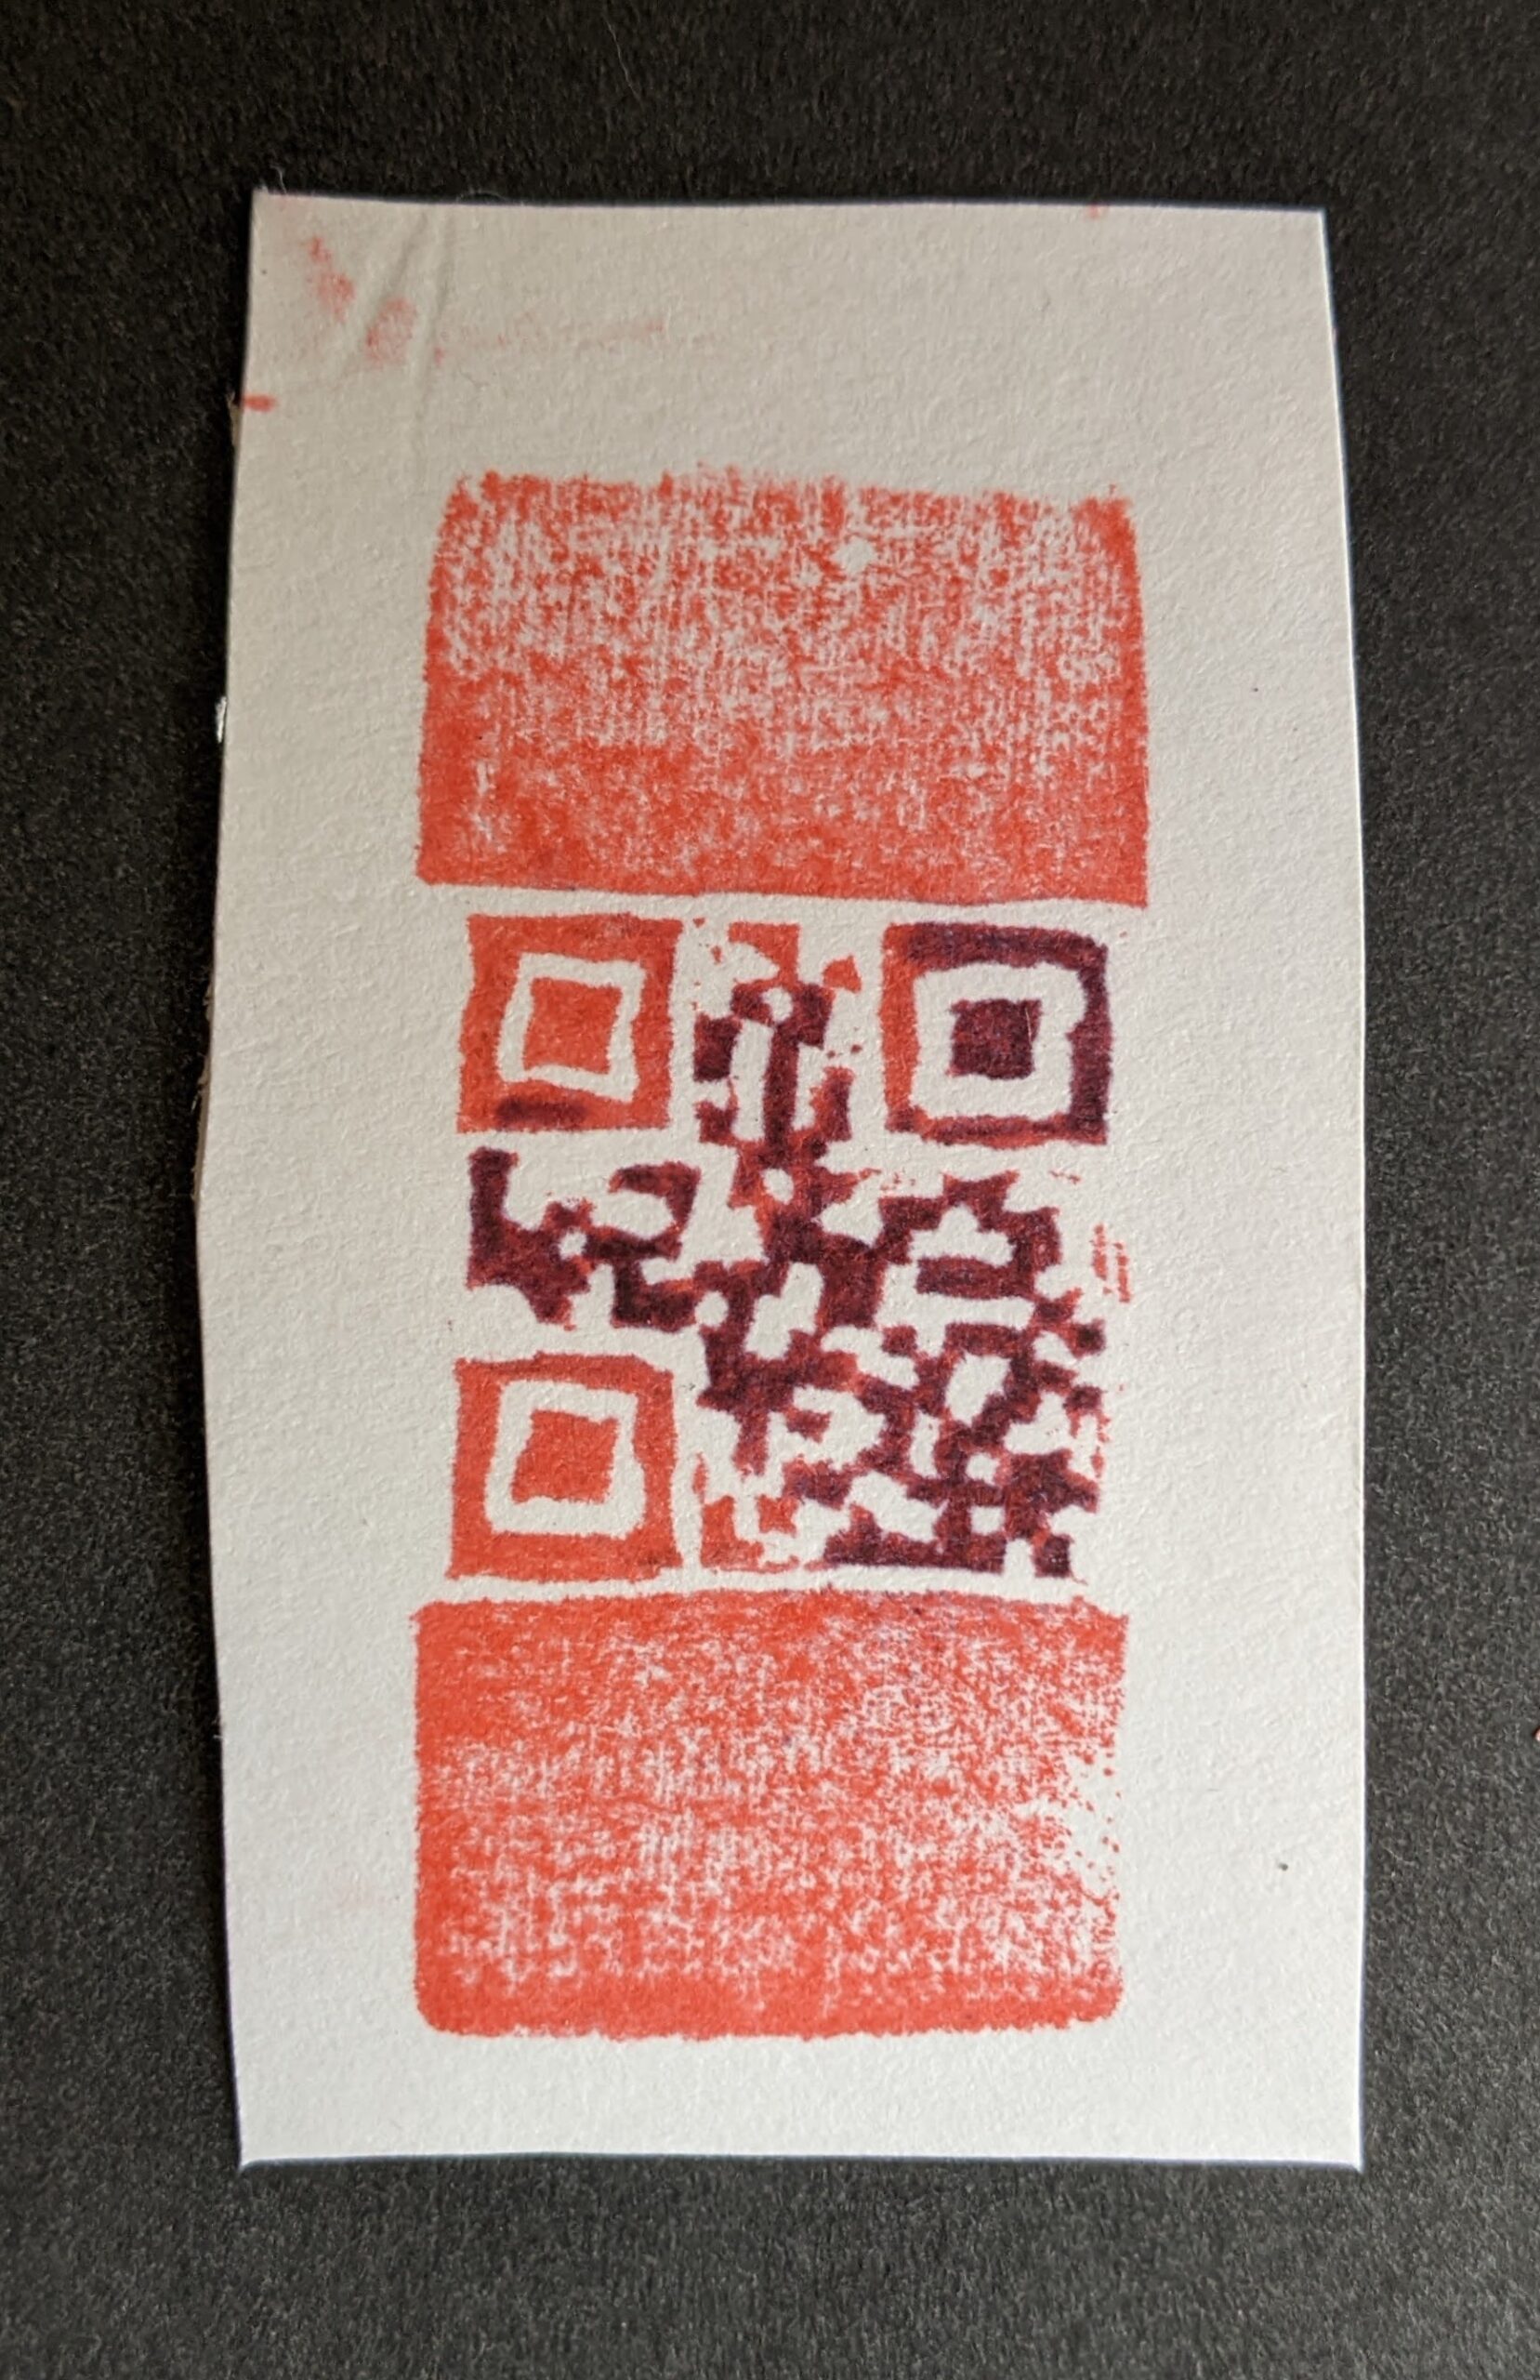 One single scannable stamp impression